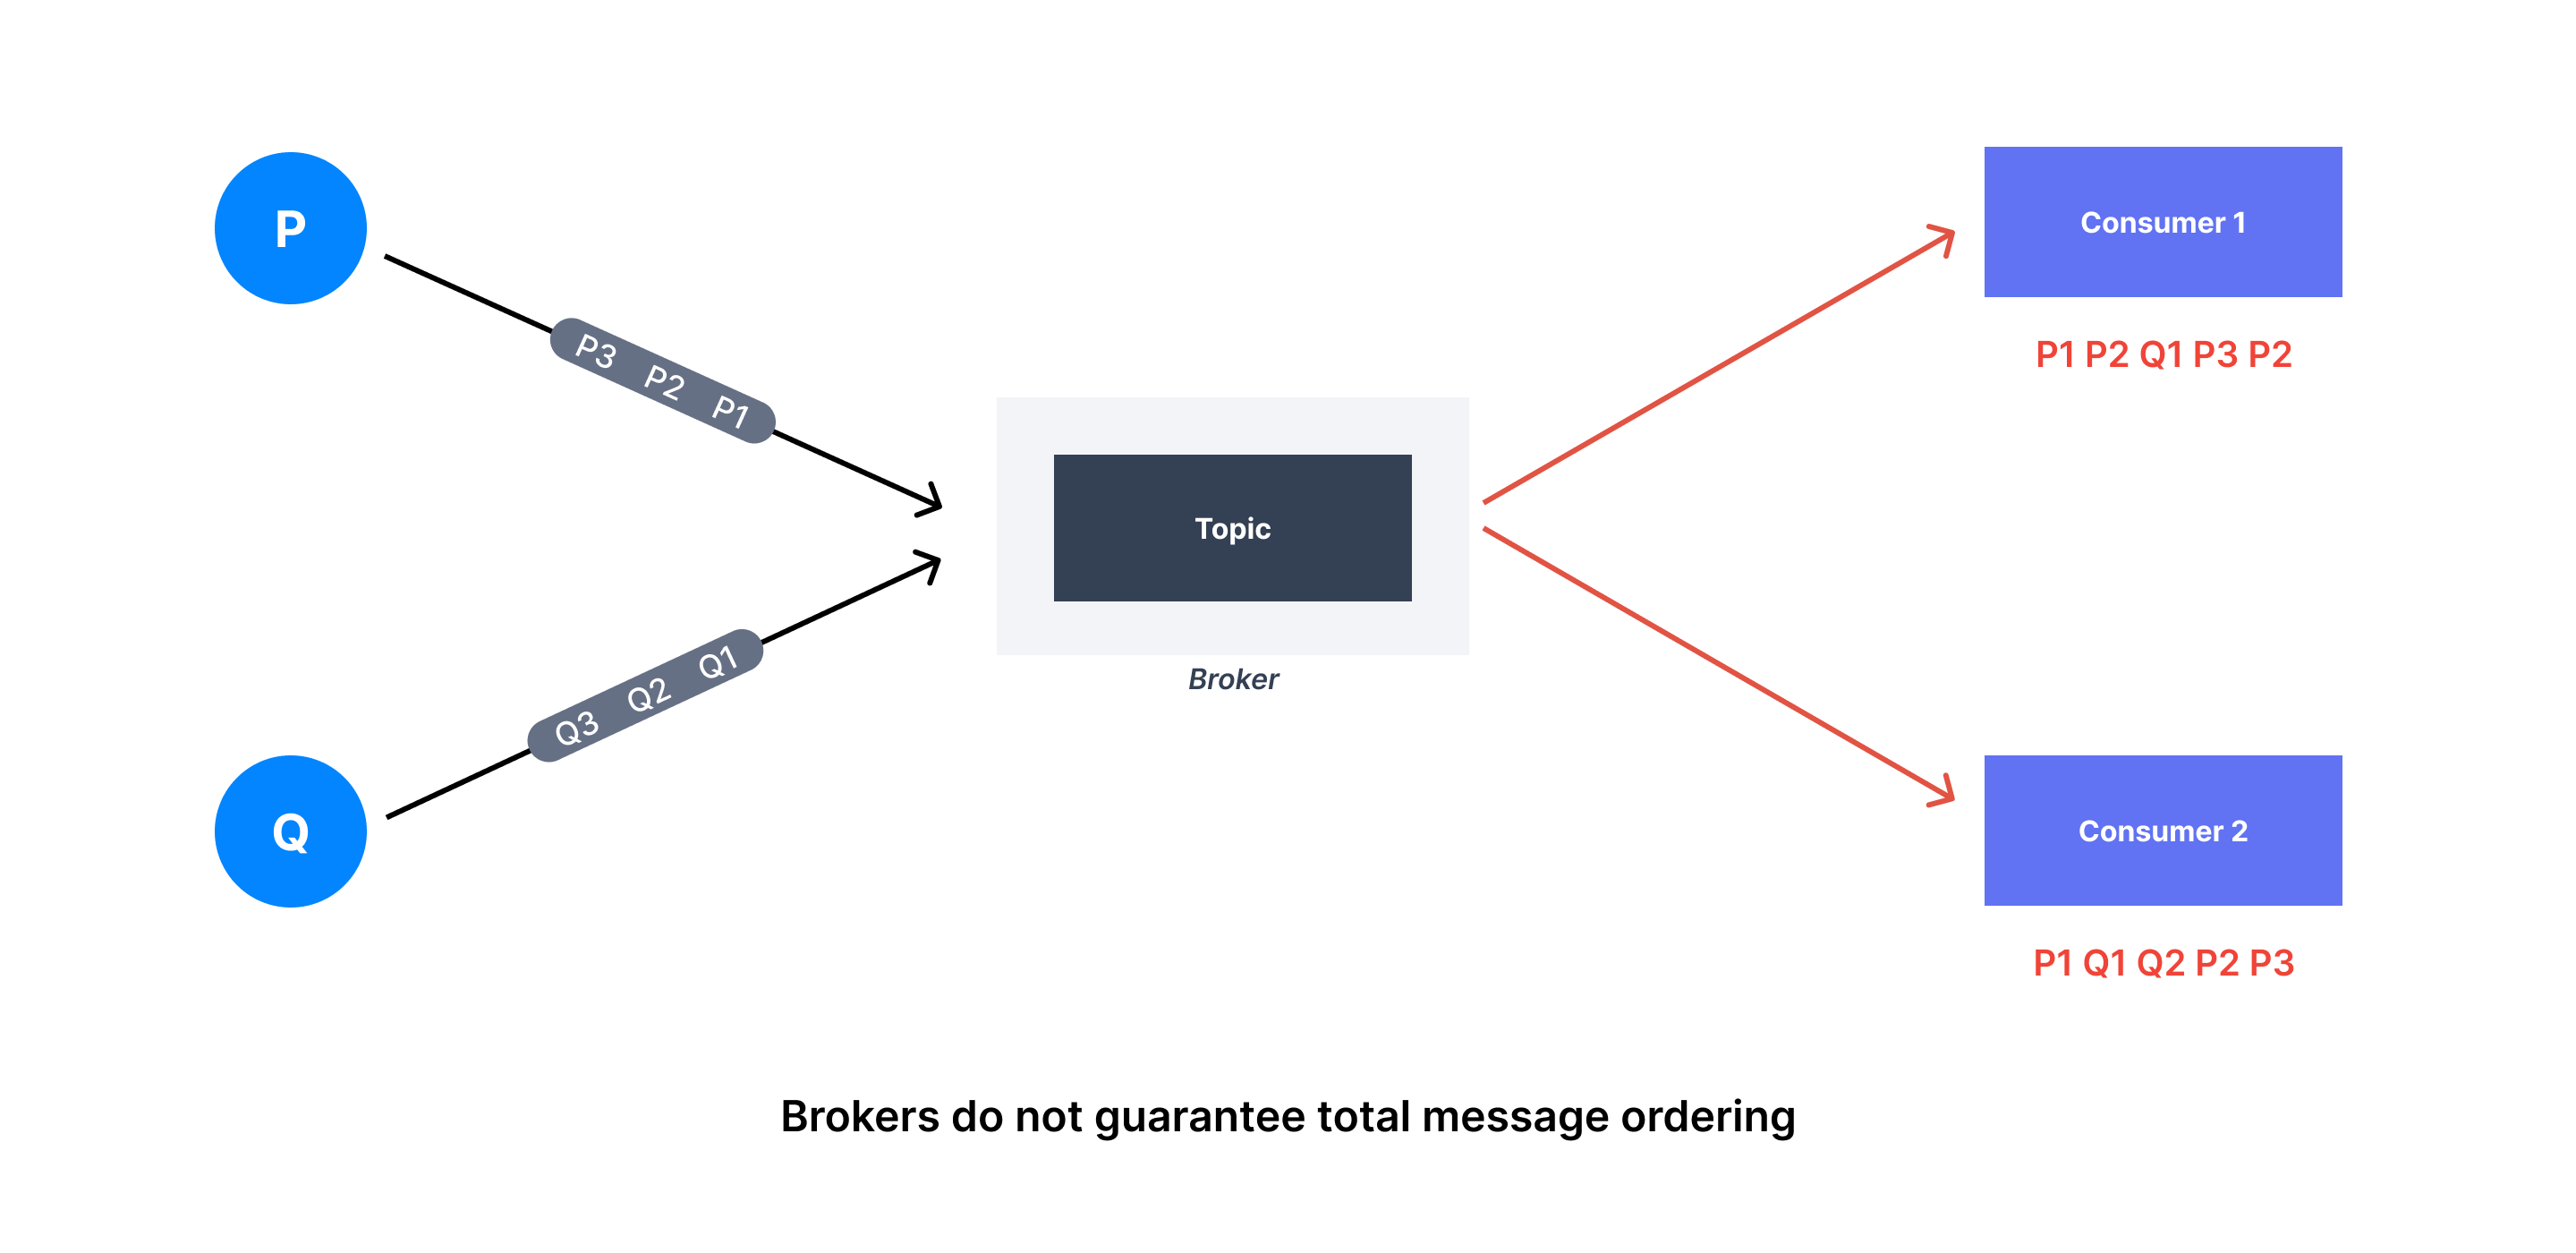 Figure 06 - Brokers do not guarantee total message ordering